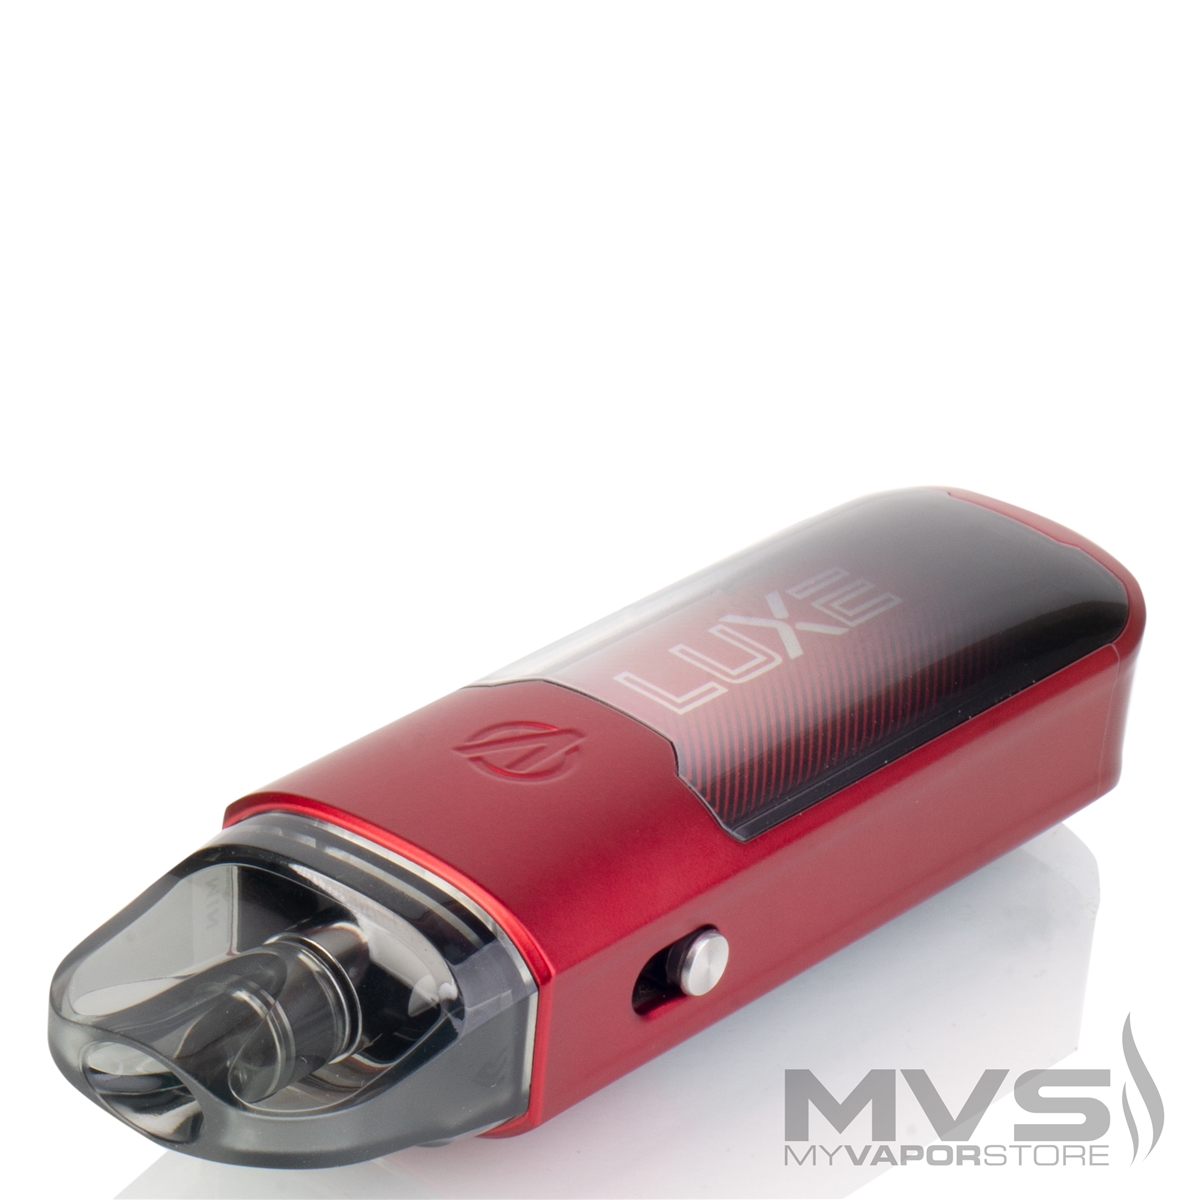 Vaporesso Luxe XR Max 80W Vape Kit - $35.99